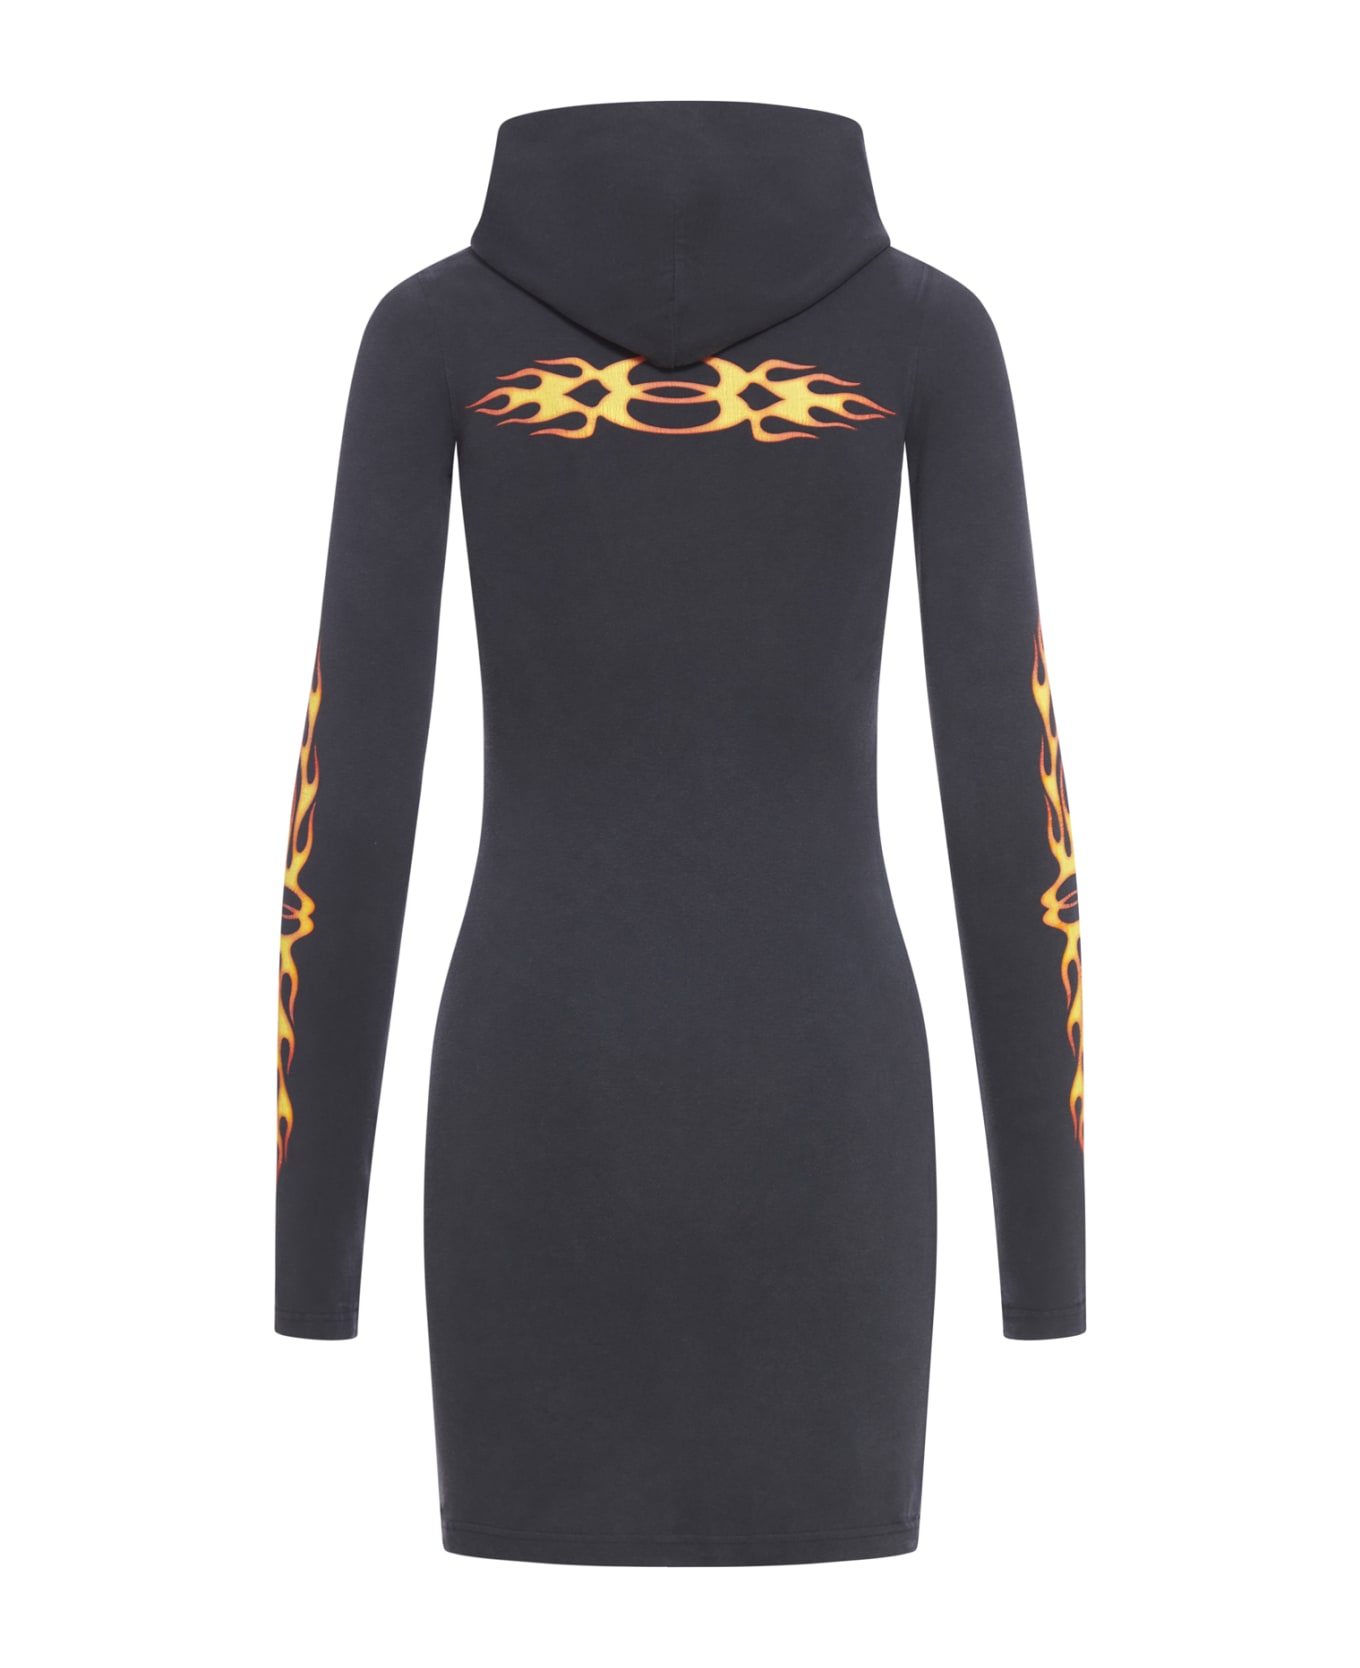 Balenciaga Hooded Dress Burning Unity Stretch Plg Jrsy - Washed Out Black